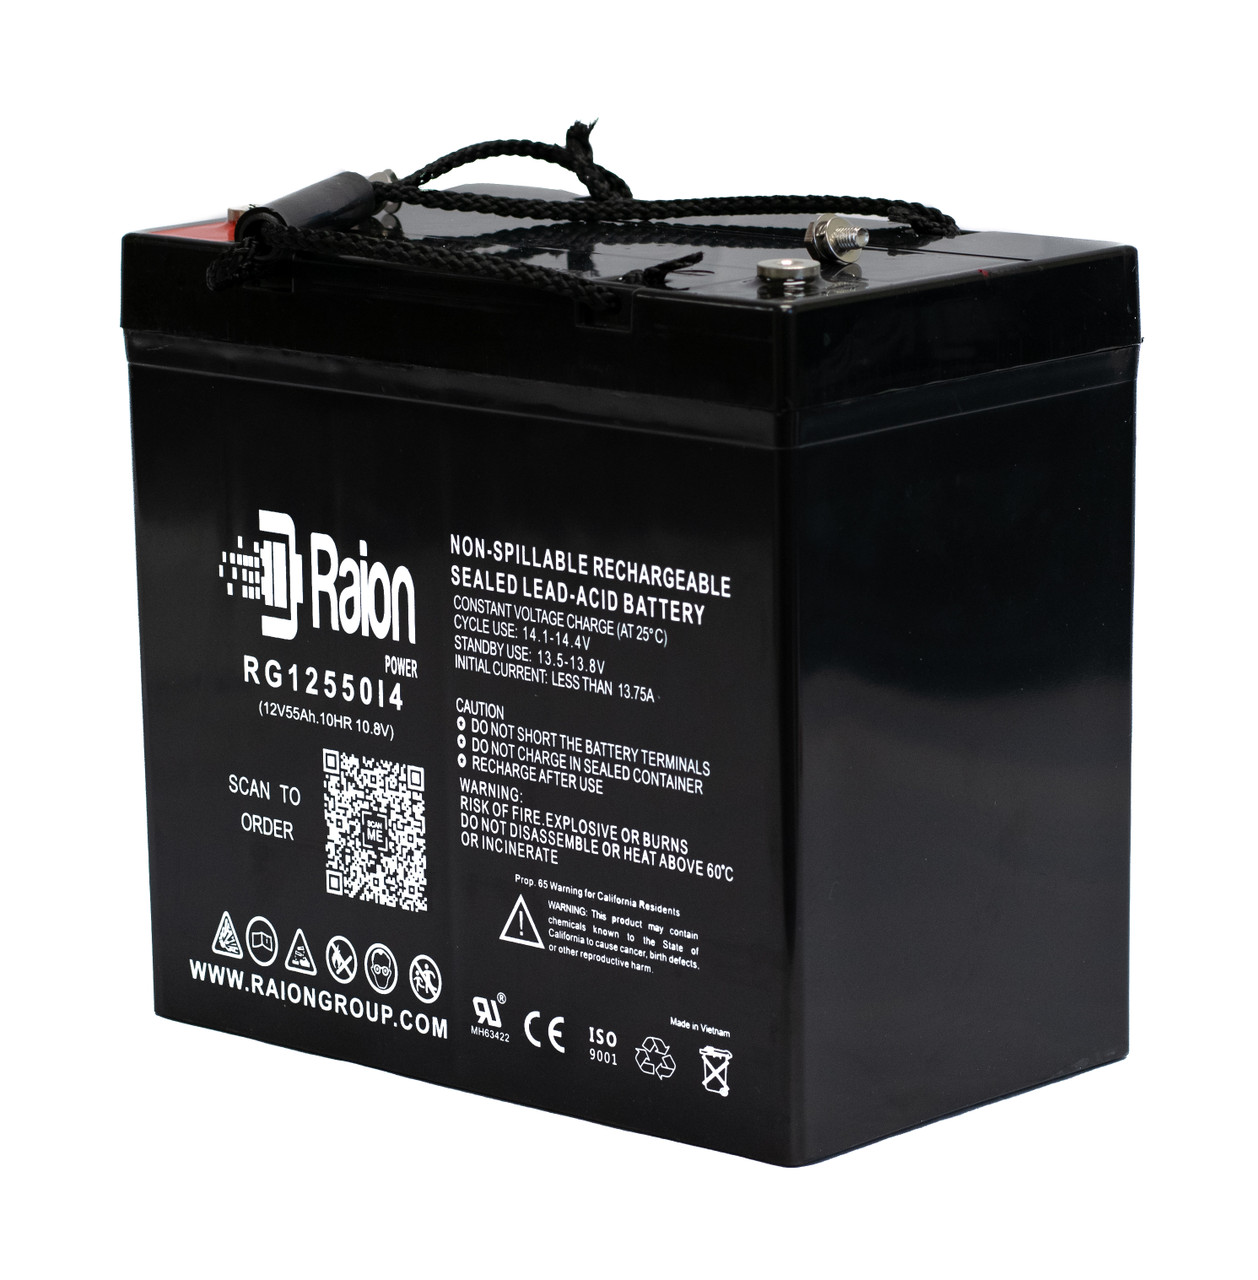 Raion Power Replacement 12V 55Ah Battery for Vasworld Power GB12-50 - 1 Pack